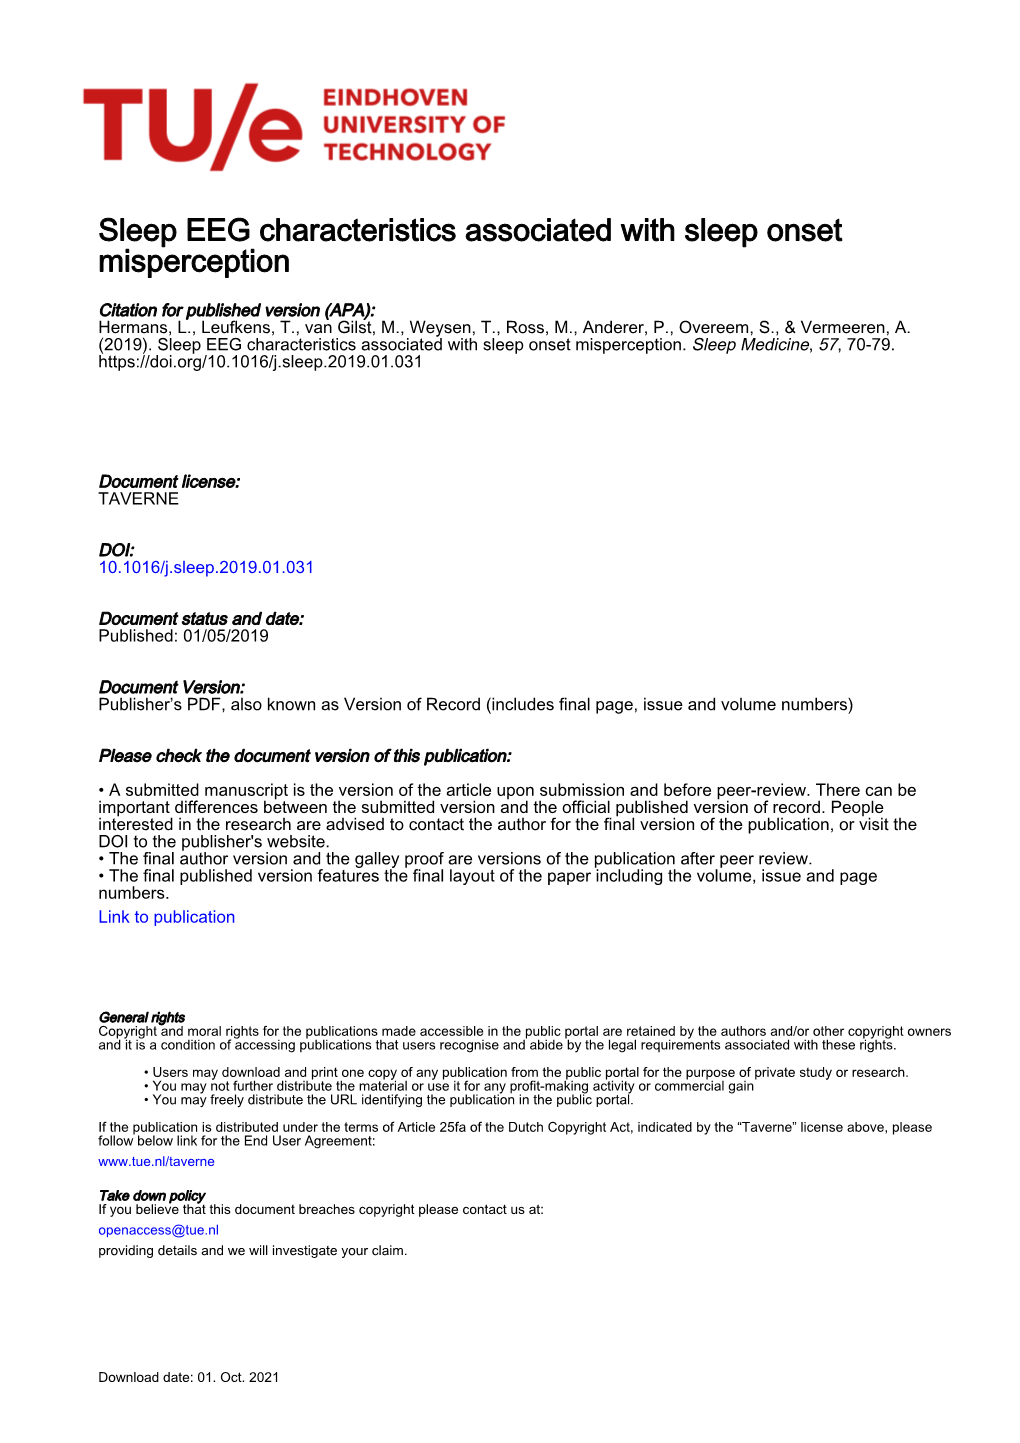 Sleep EEG Characteristics Associated with Sleep Onset Misperception